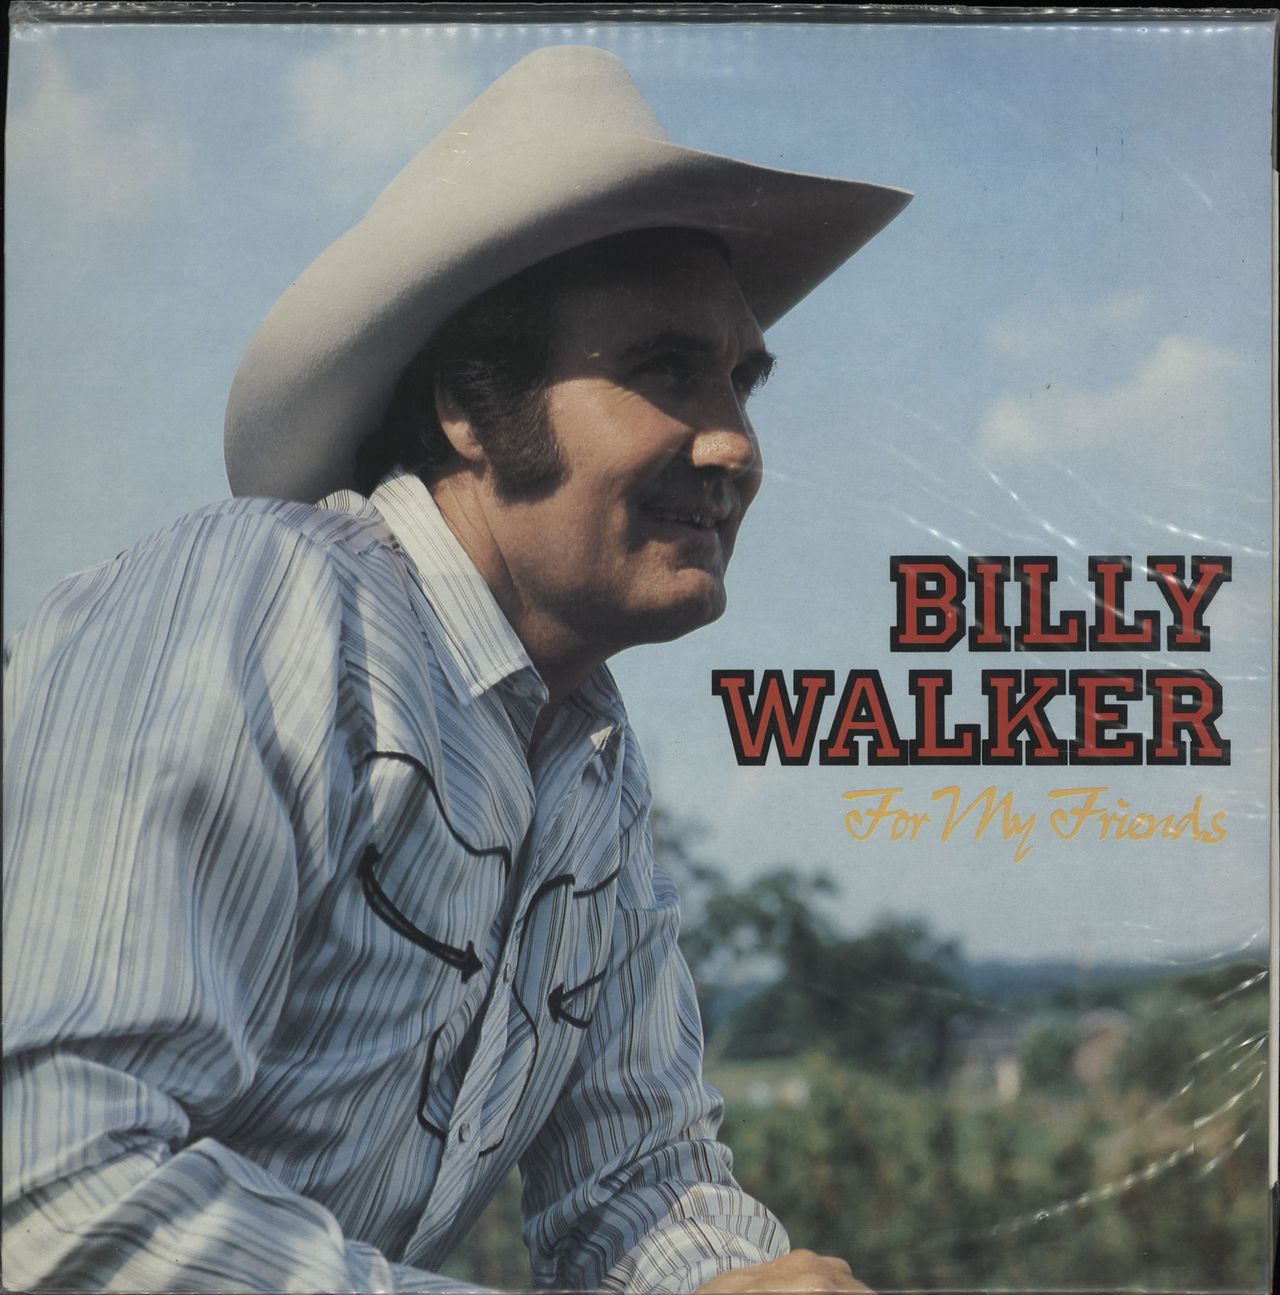 Billy Walker For My Friends UK vinyl LP album (LP record) BDL3004